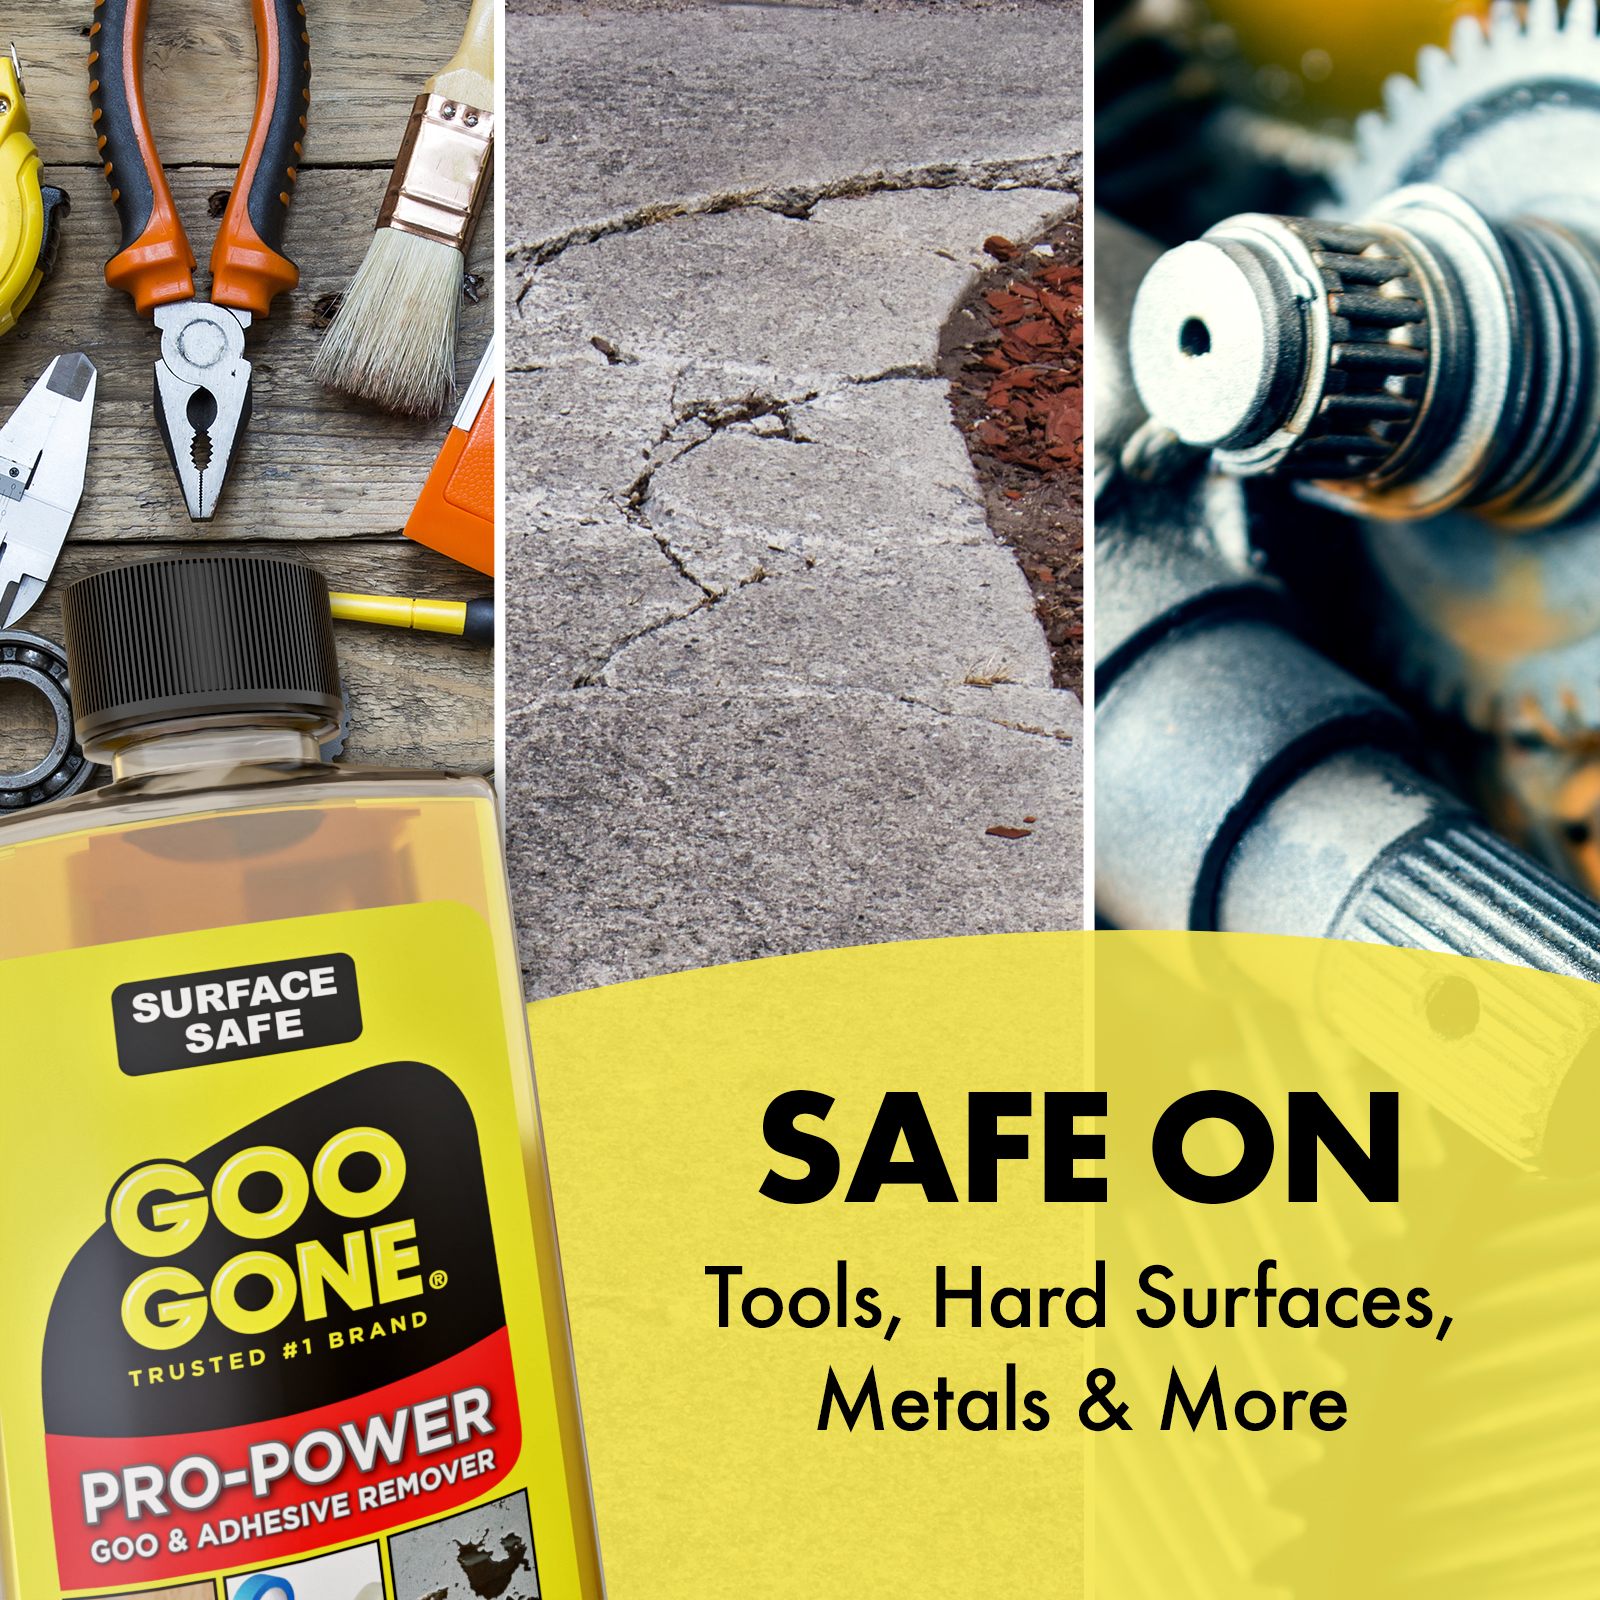 Goo Gone Pro-Power Adhesive, Grease & Tar Remover Spray, Orange Citrus Scent, 16 oz - image 4 of 7